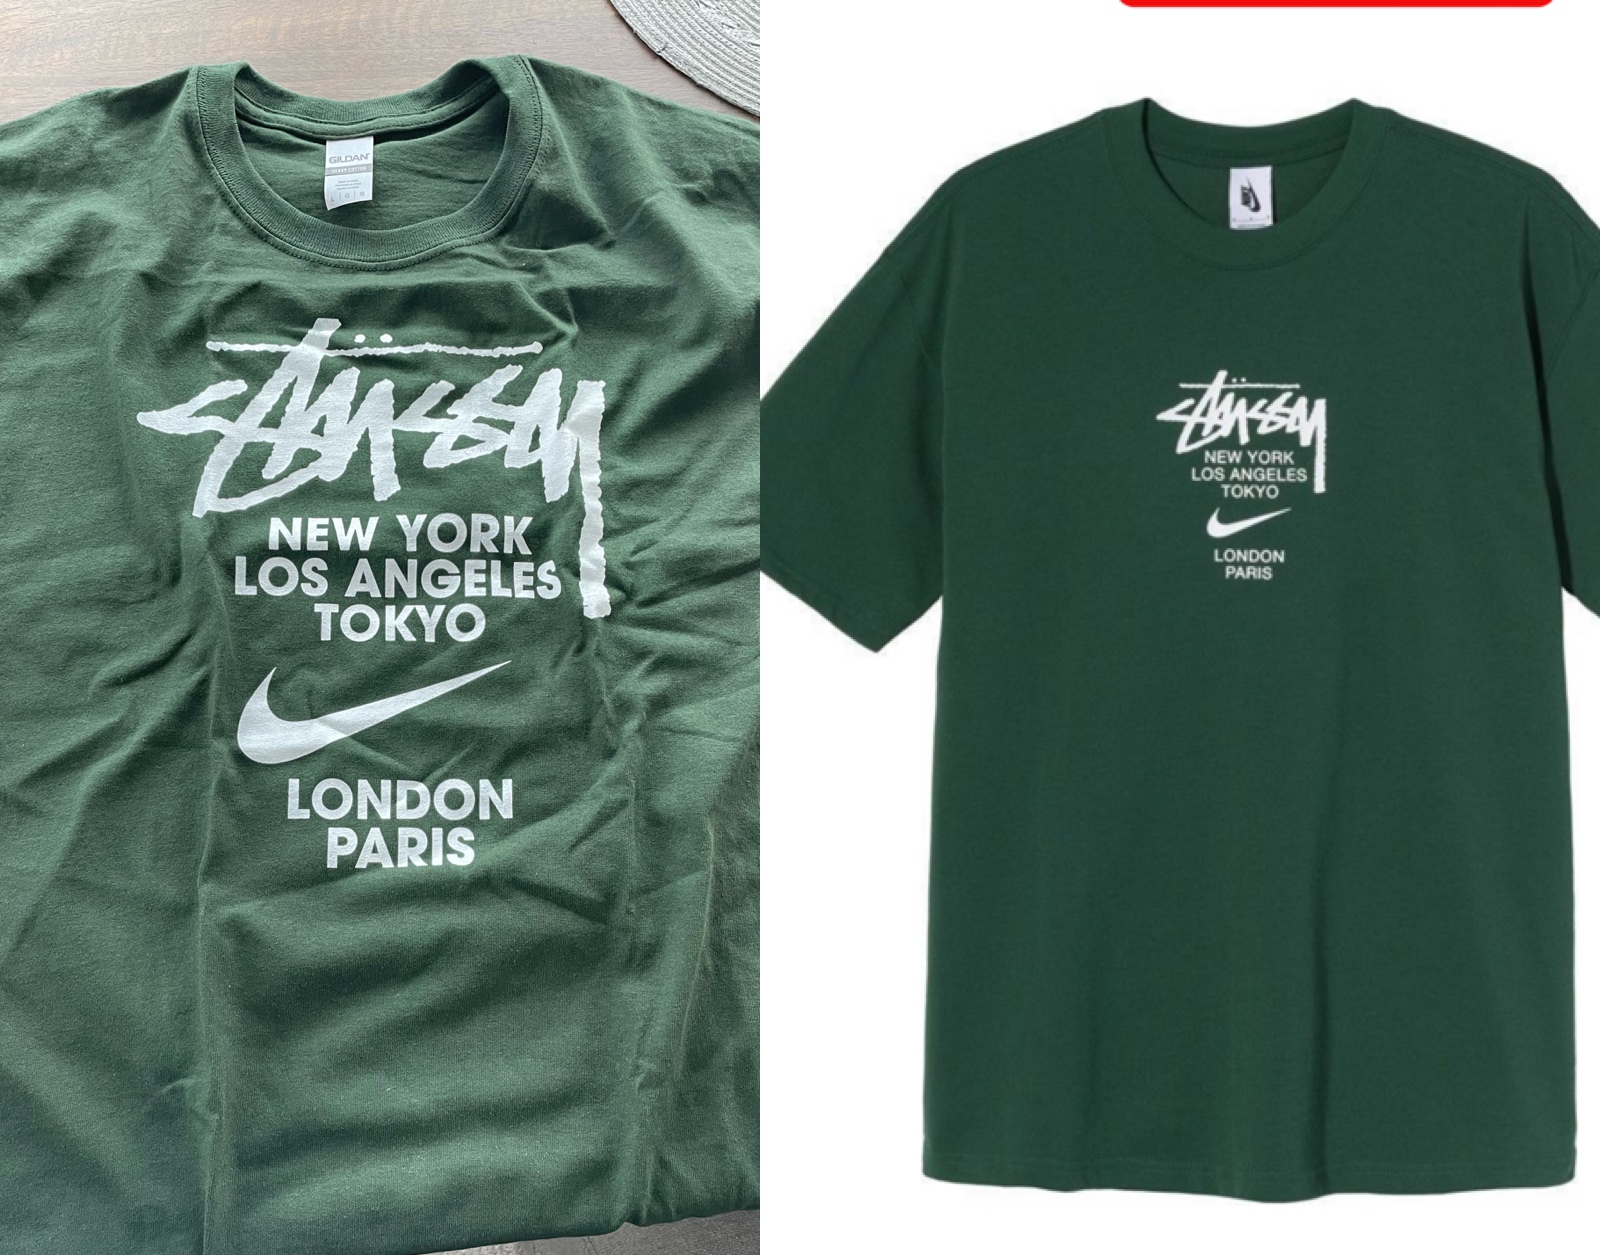 T-shirt received, vs website photo